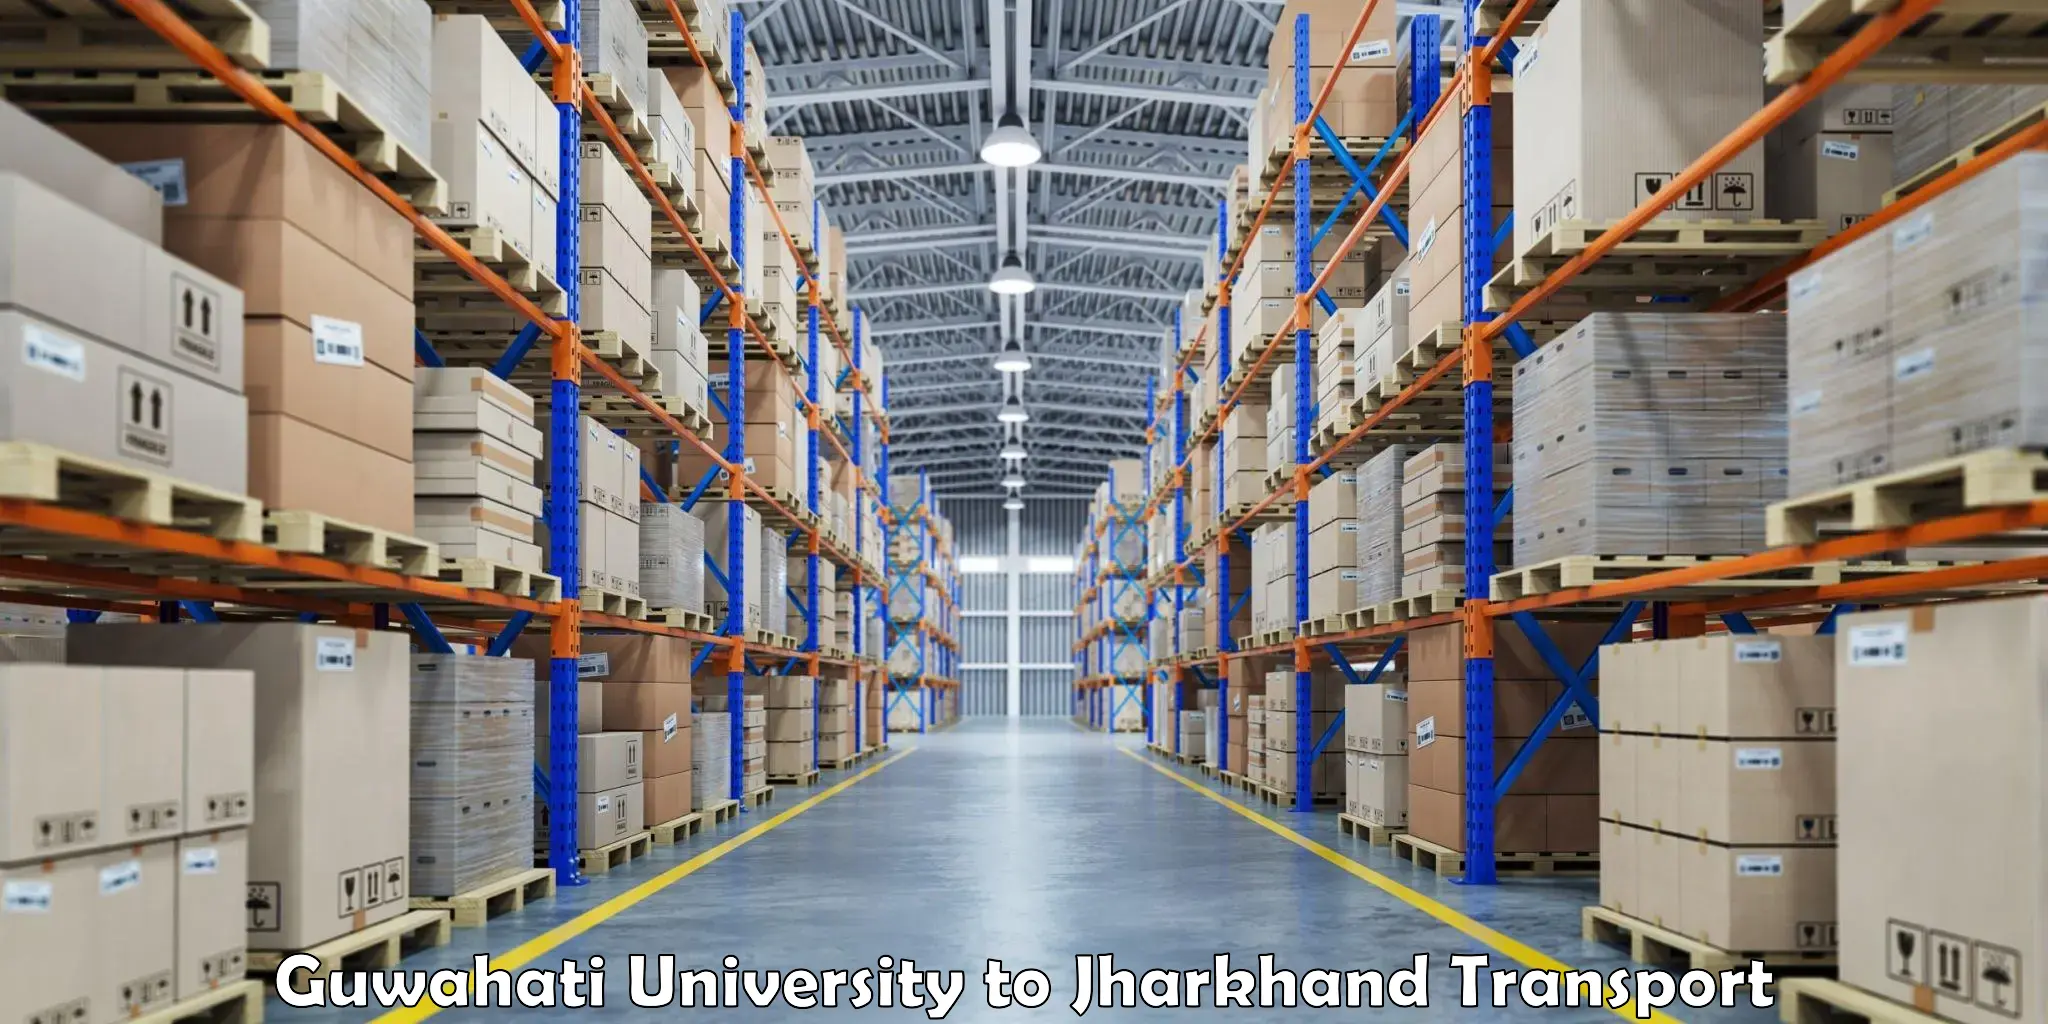 Transport in sharing in Guwahati University to Dhanbad